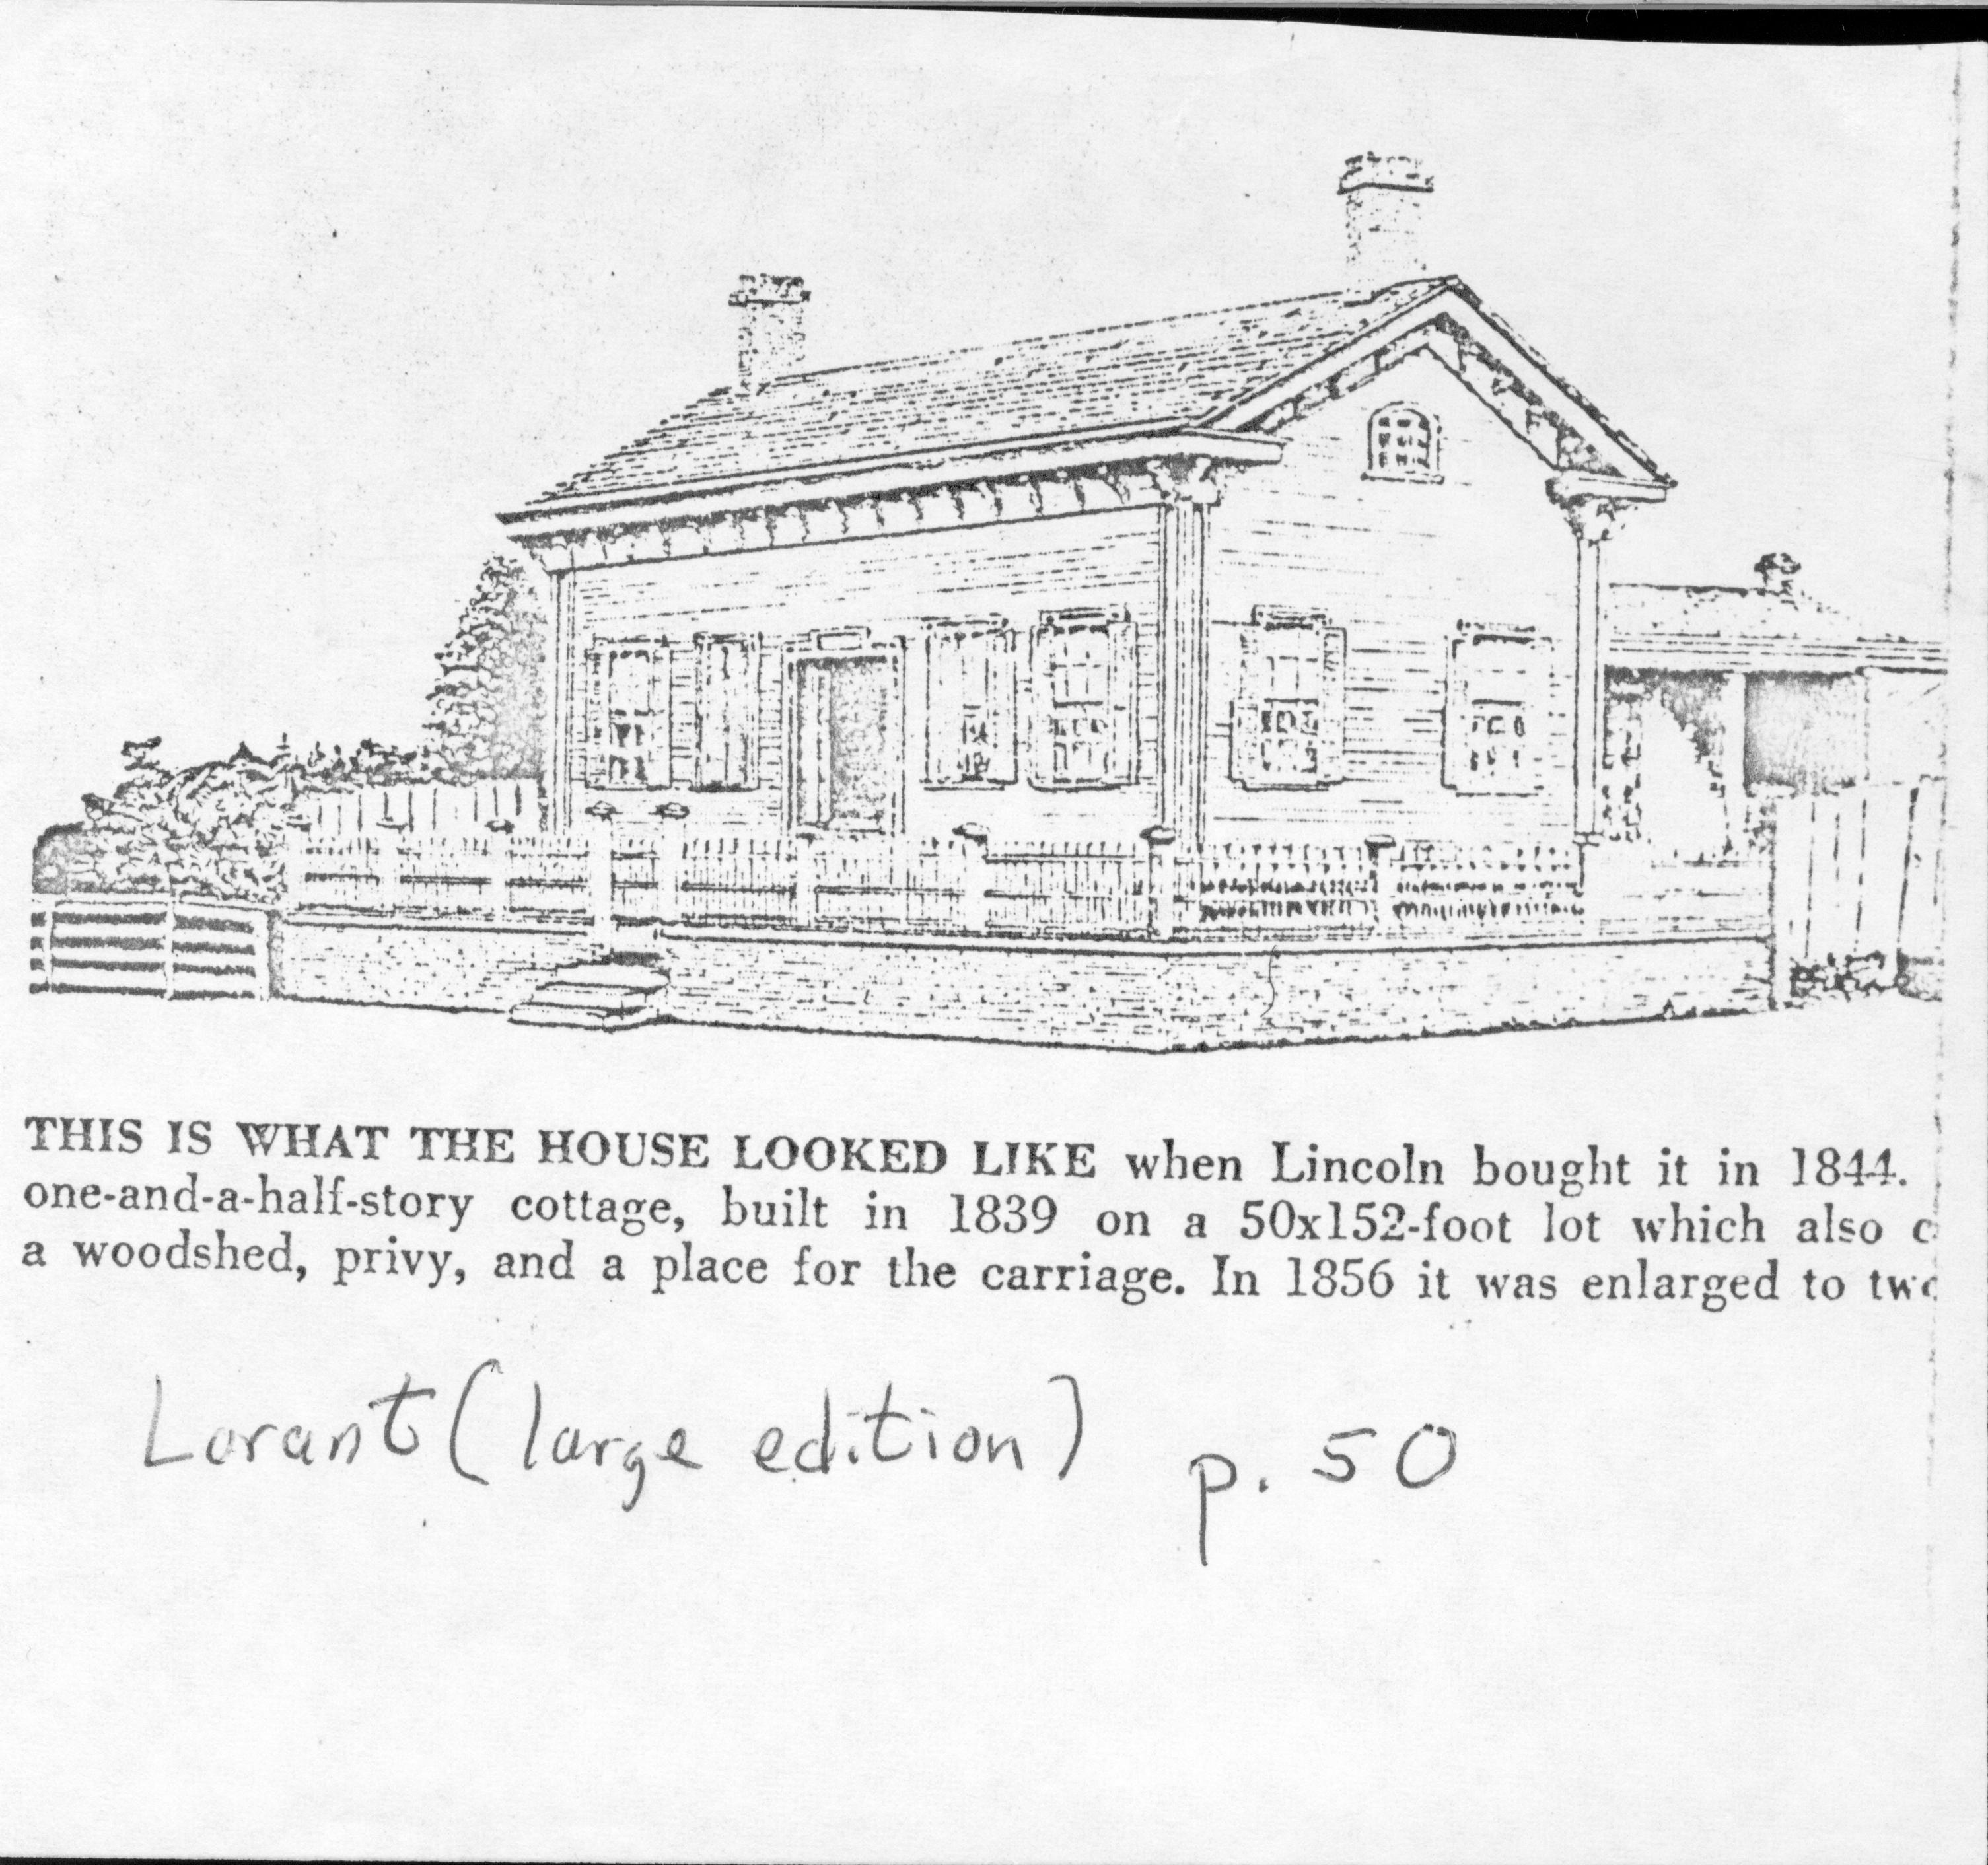 Lincoln Home 1844 - Xerox copy of sketch in Lorant book p.50 